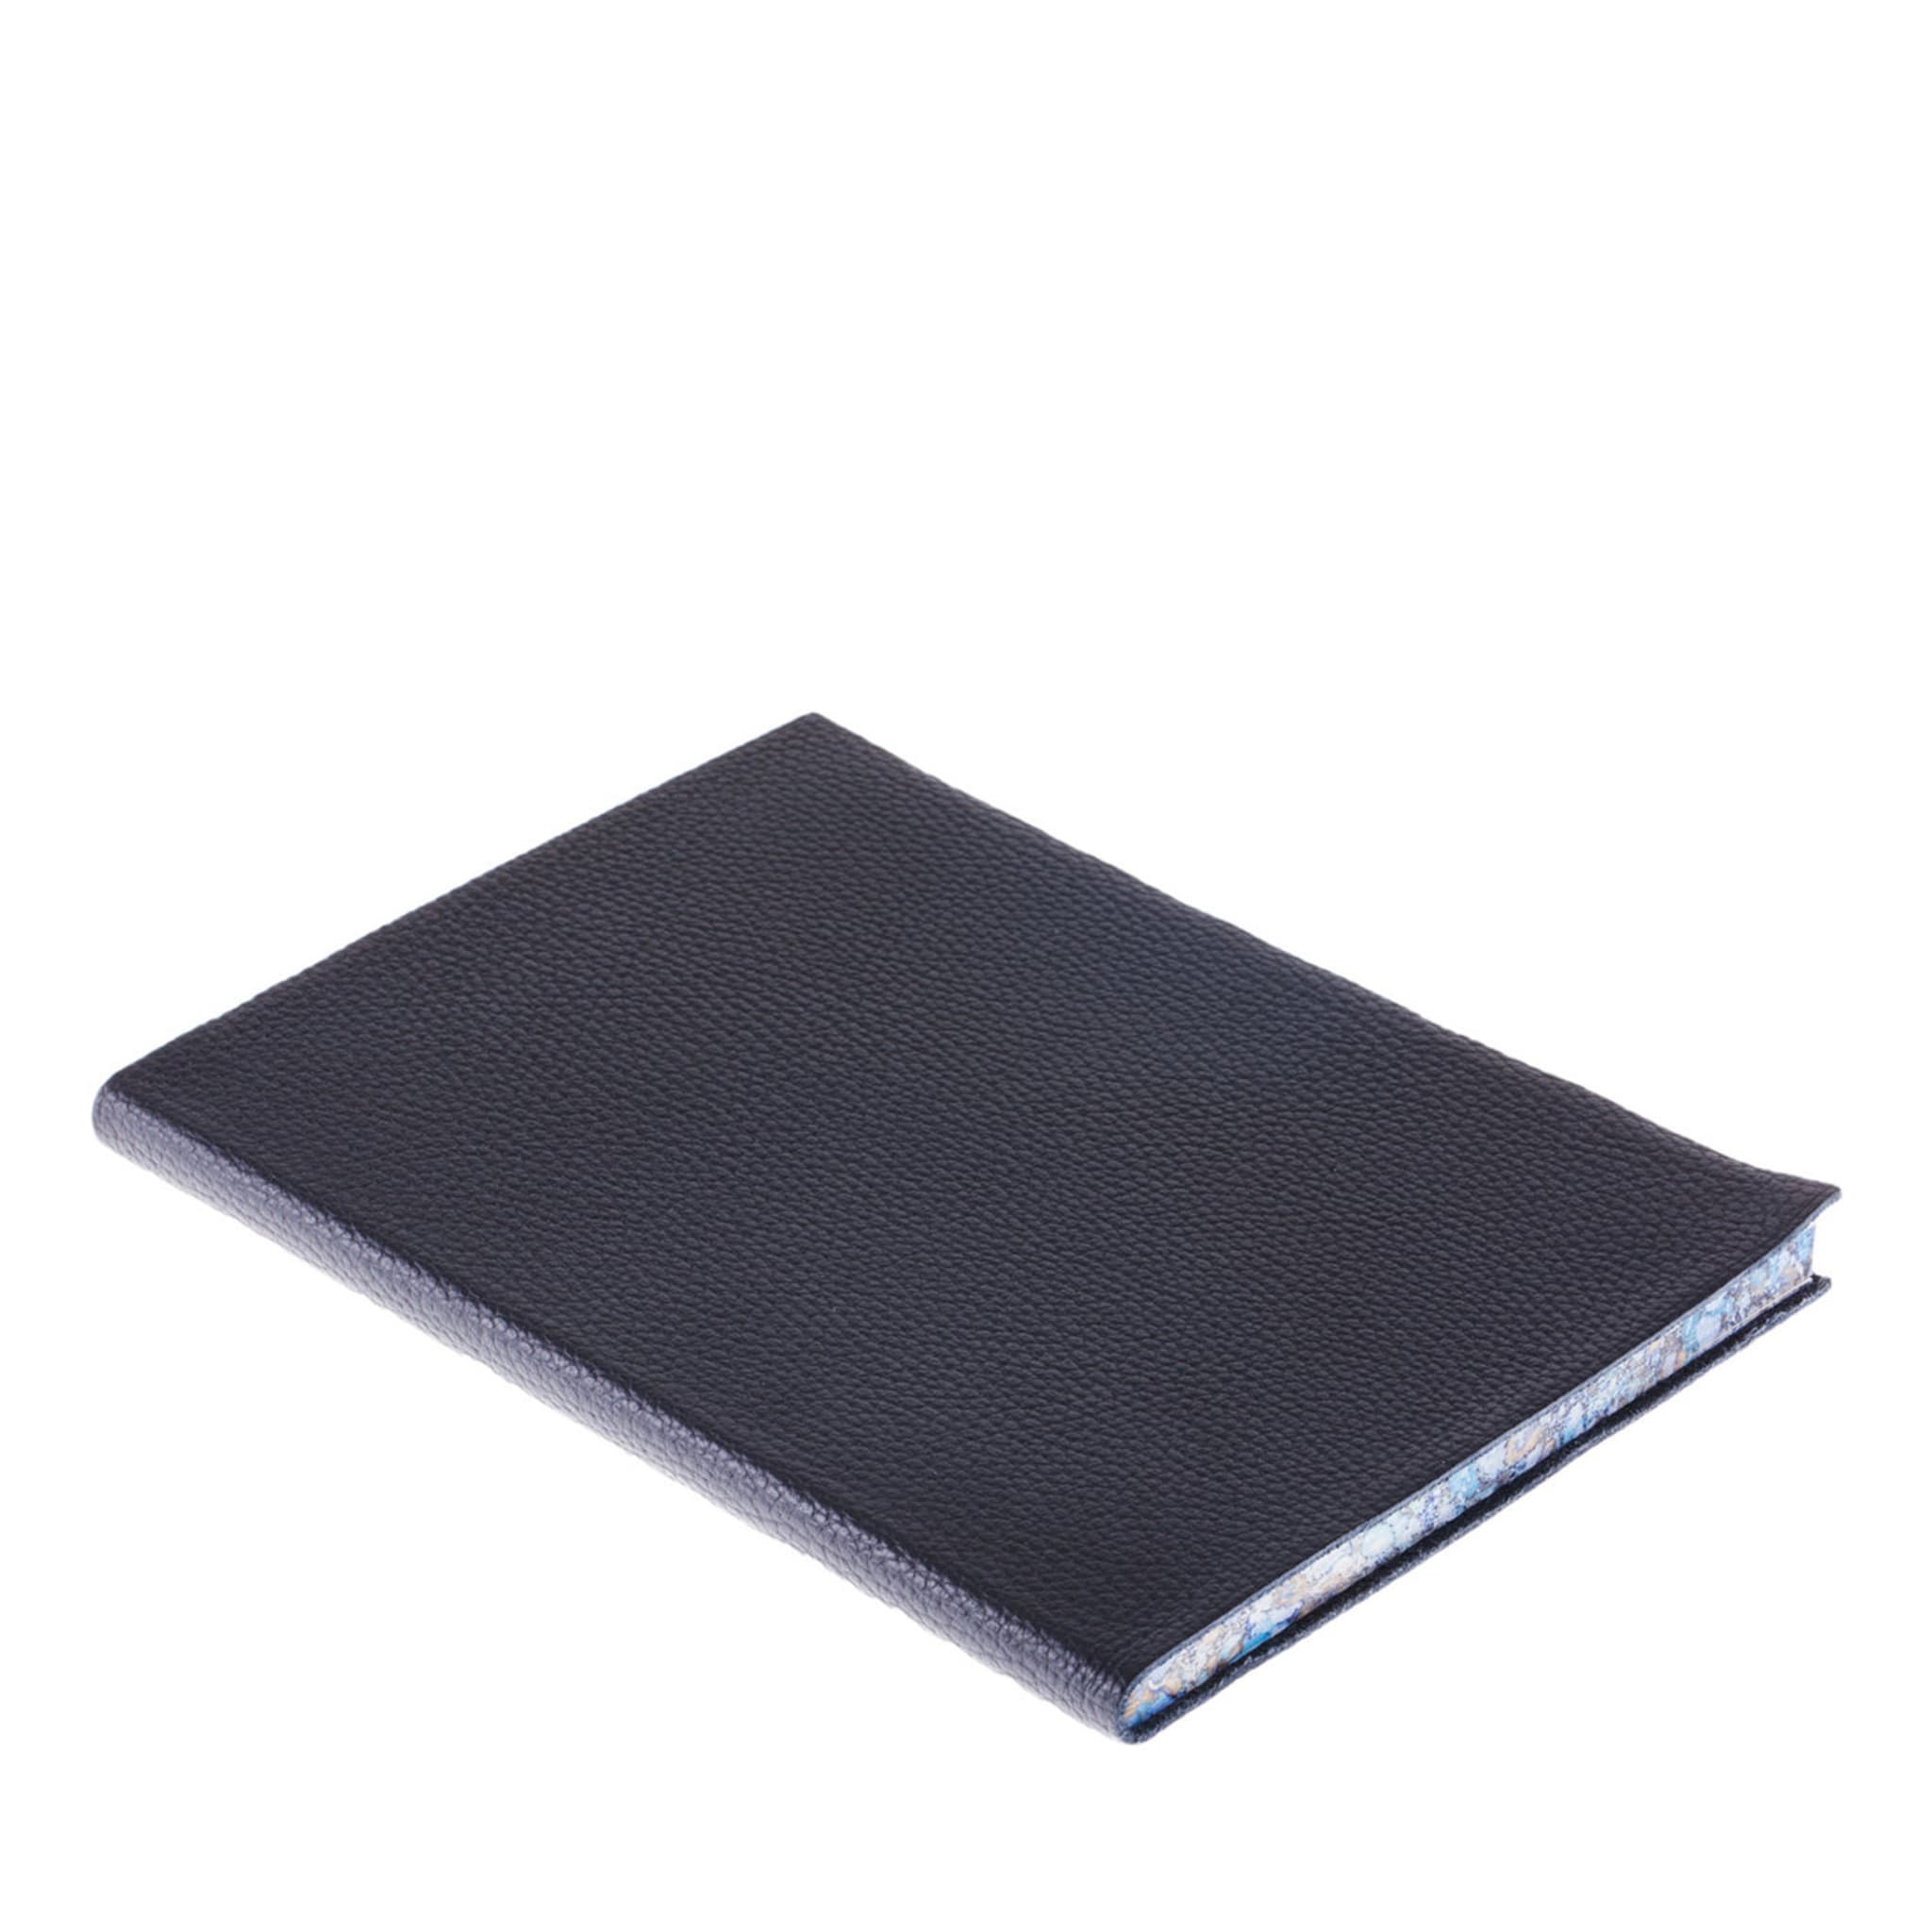 Nero Elegante Leather Notebook - Main view